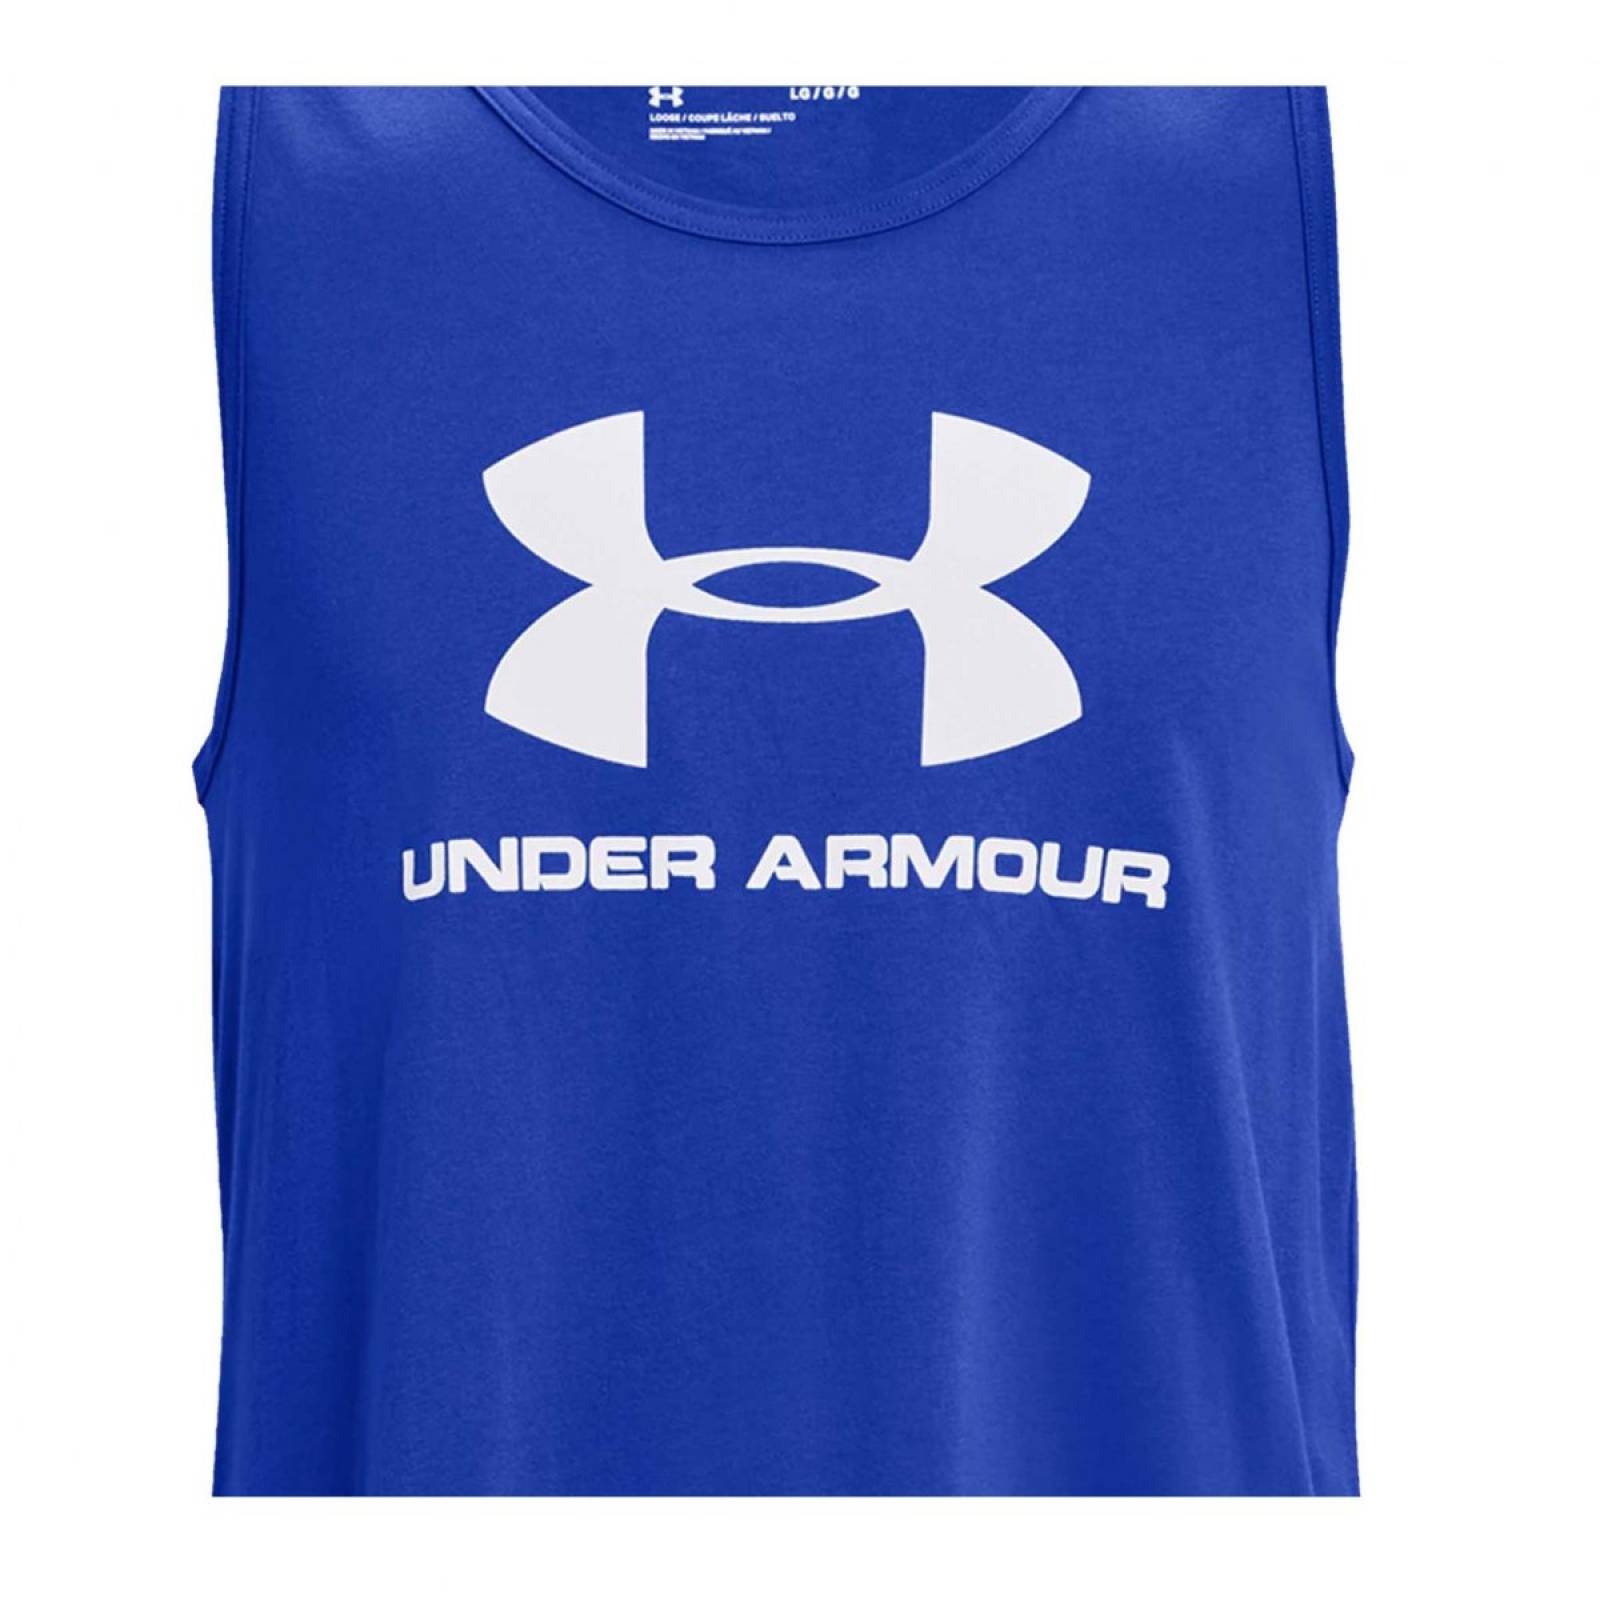 Camiseta UNDER ARMOUR Hombre Azul Rey Algodón - 1329582-899